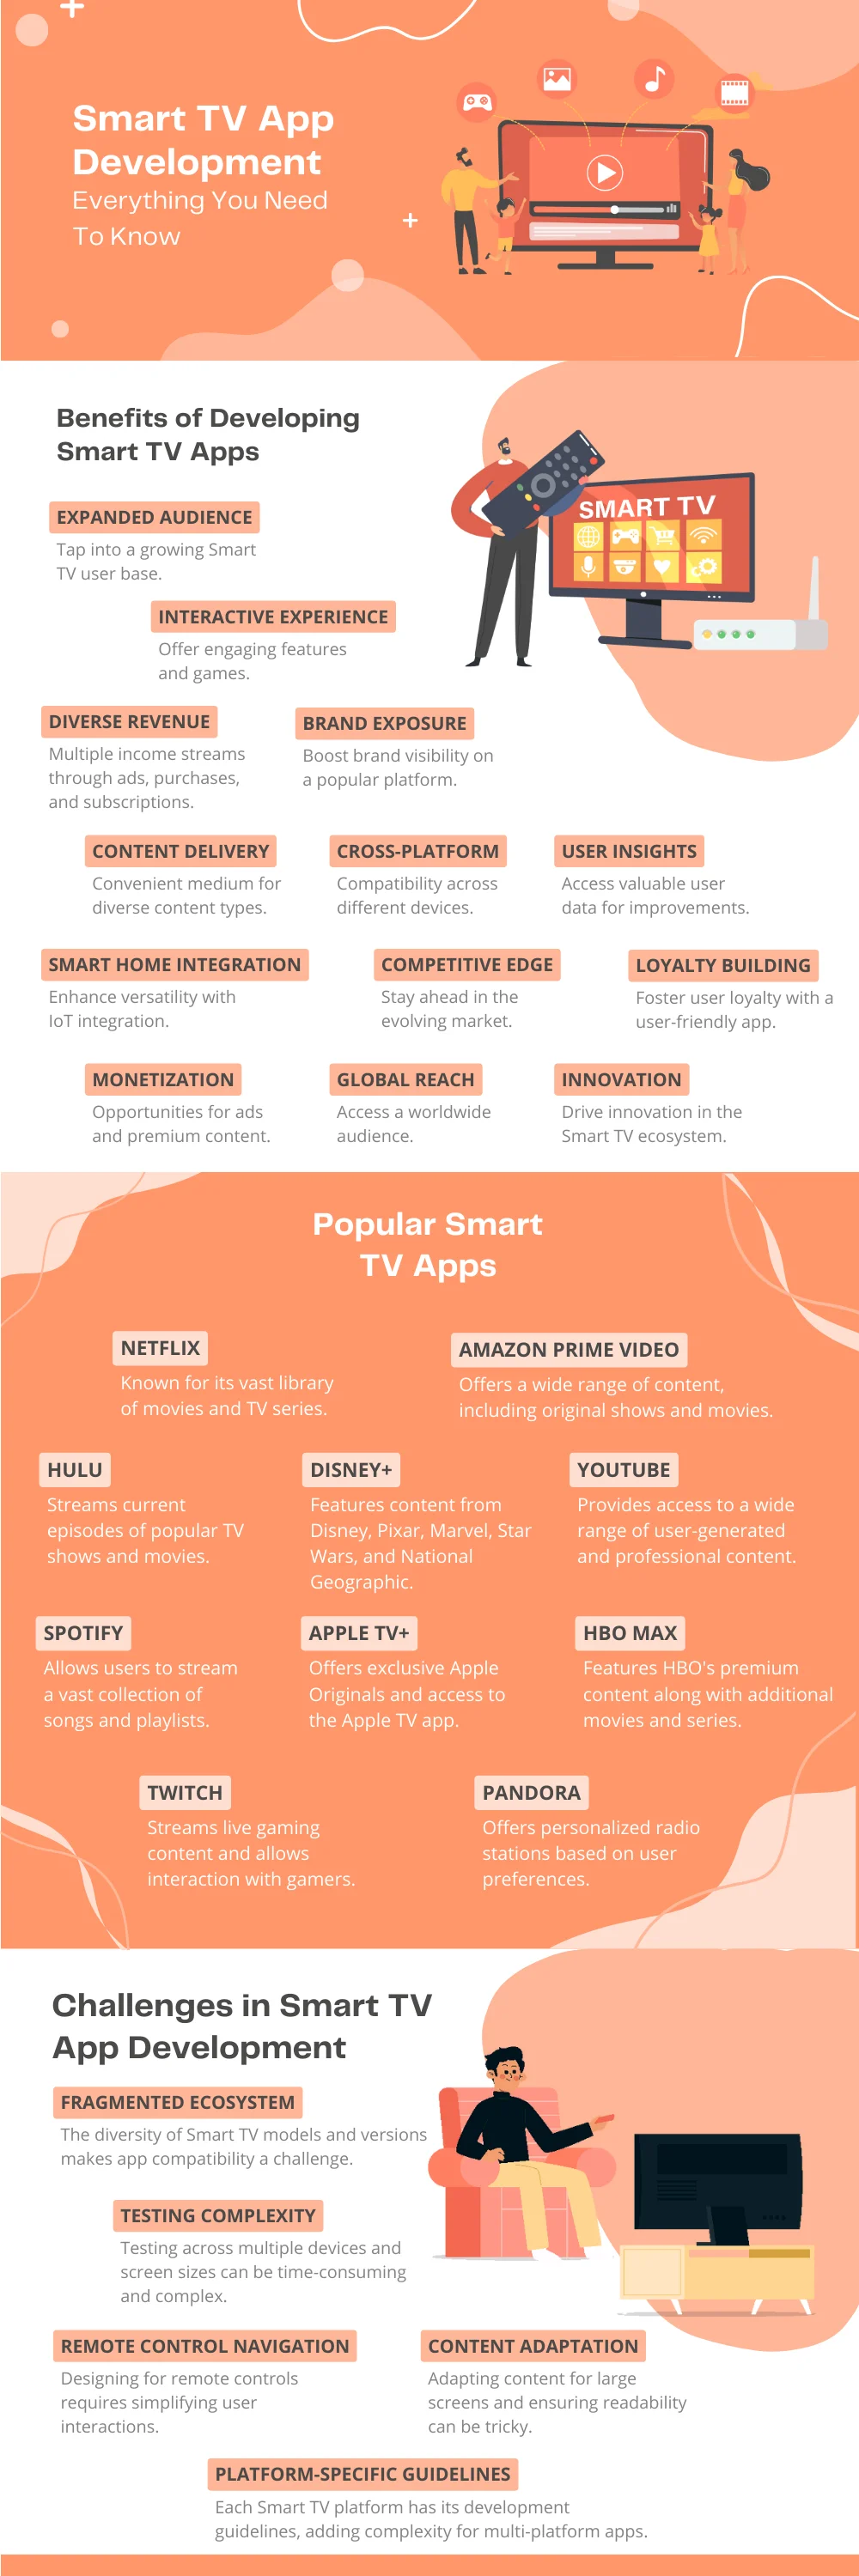 Smart TV App Development